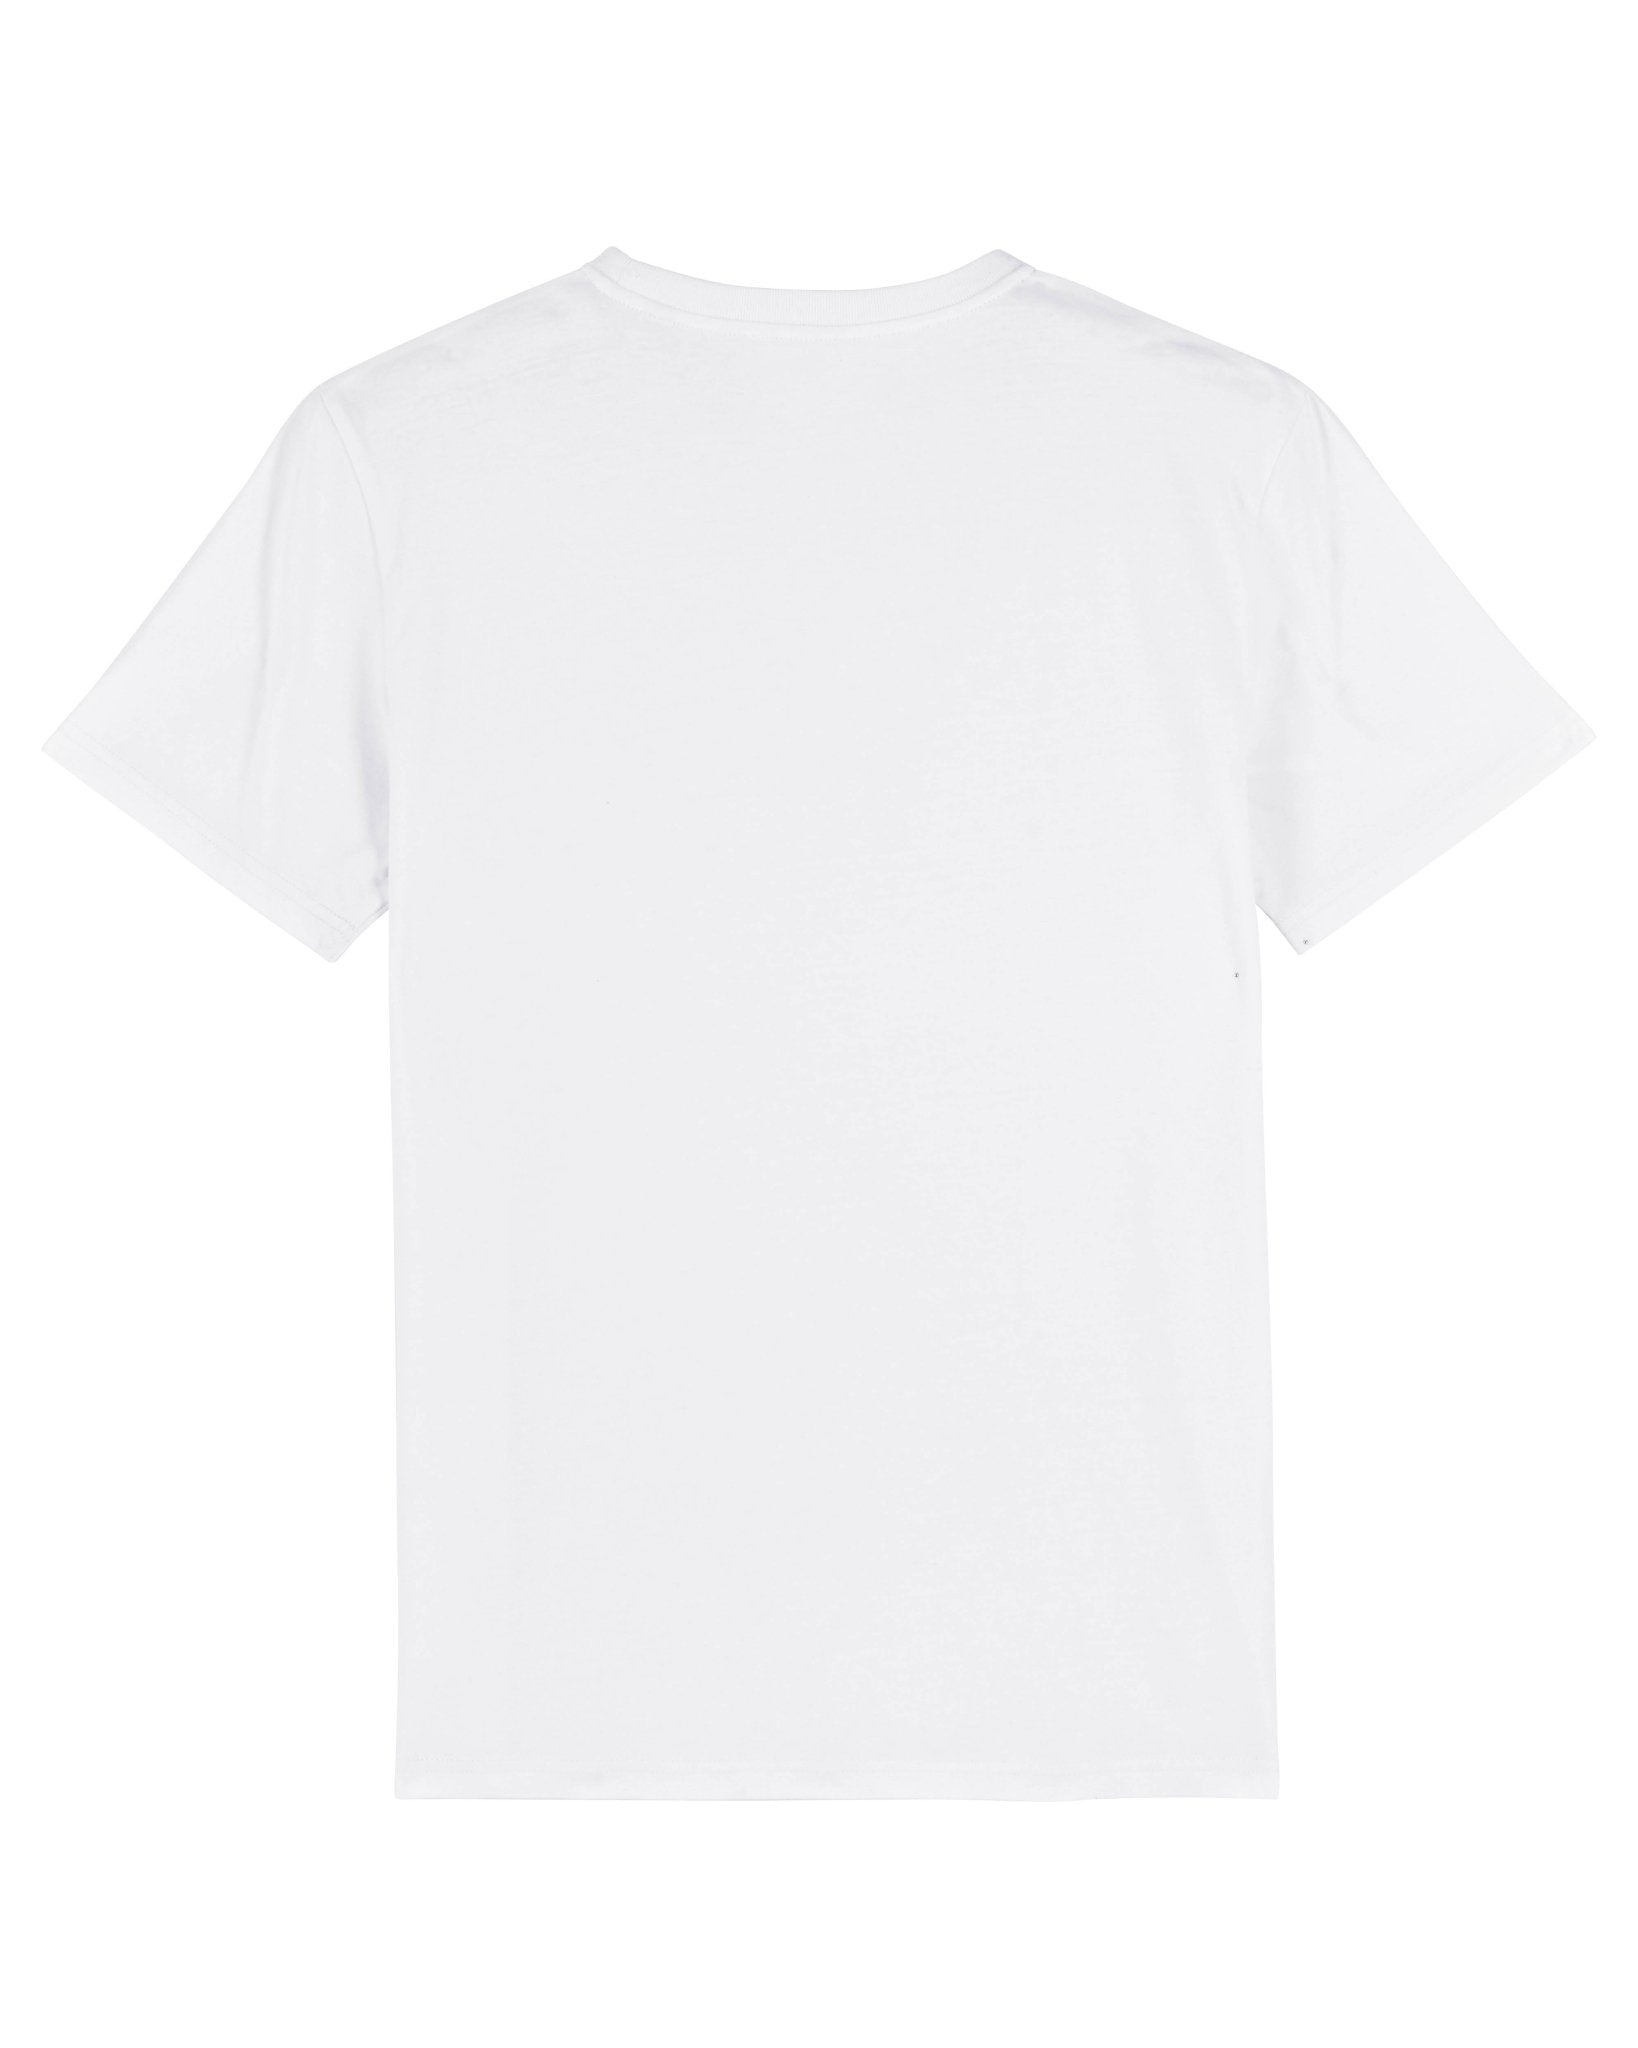 Organic T-Shirt BUCHSTABE D | unisex | small print - Studio Schön®